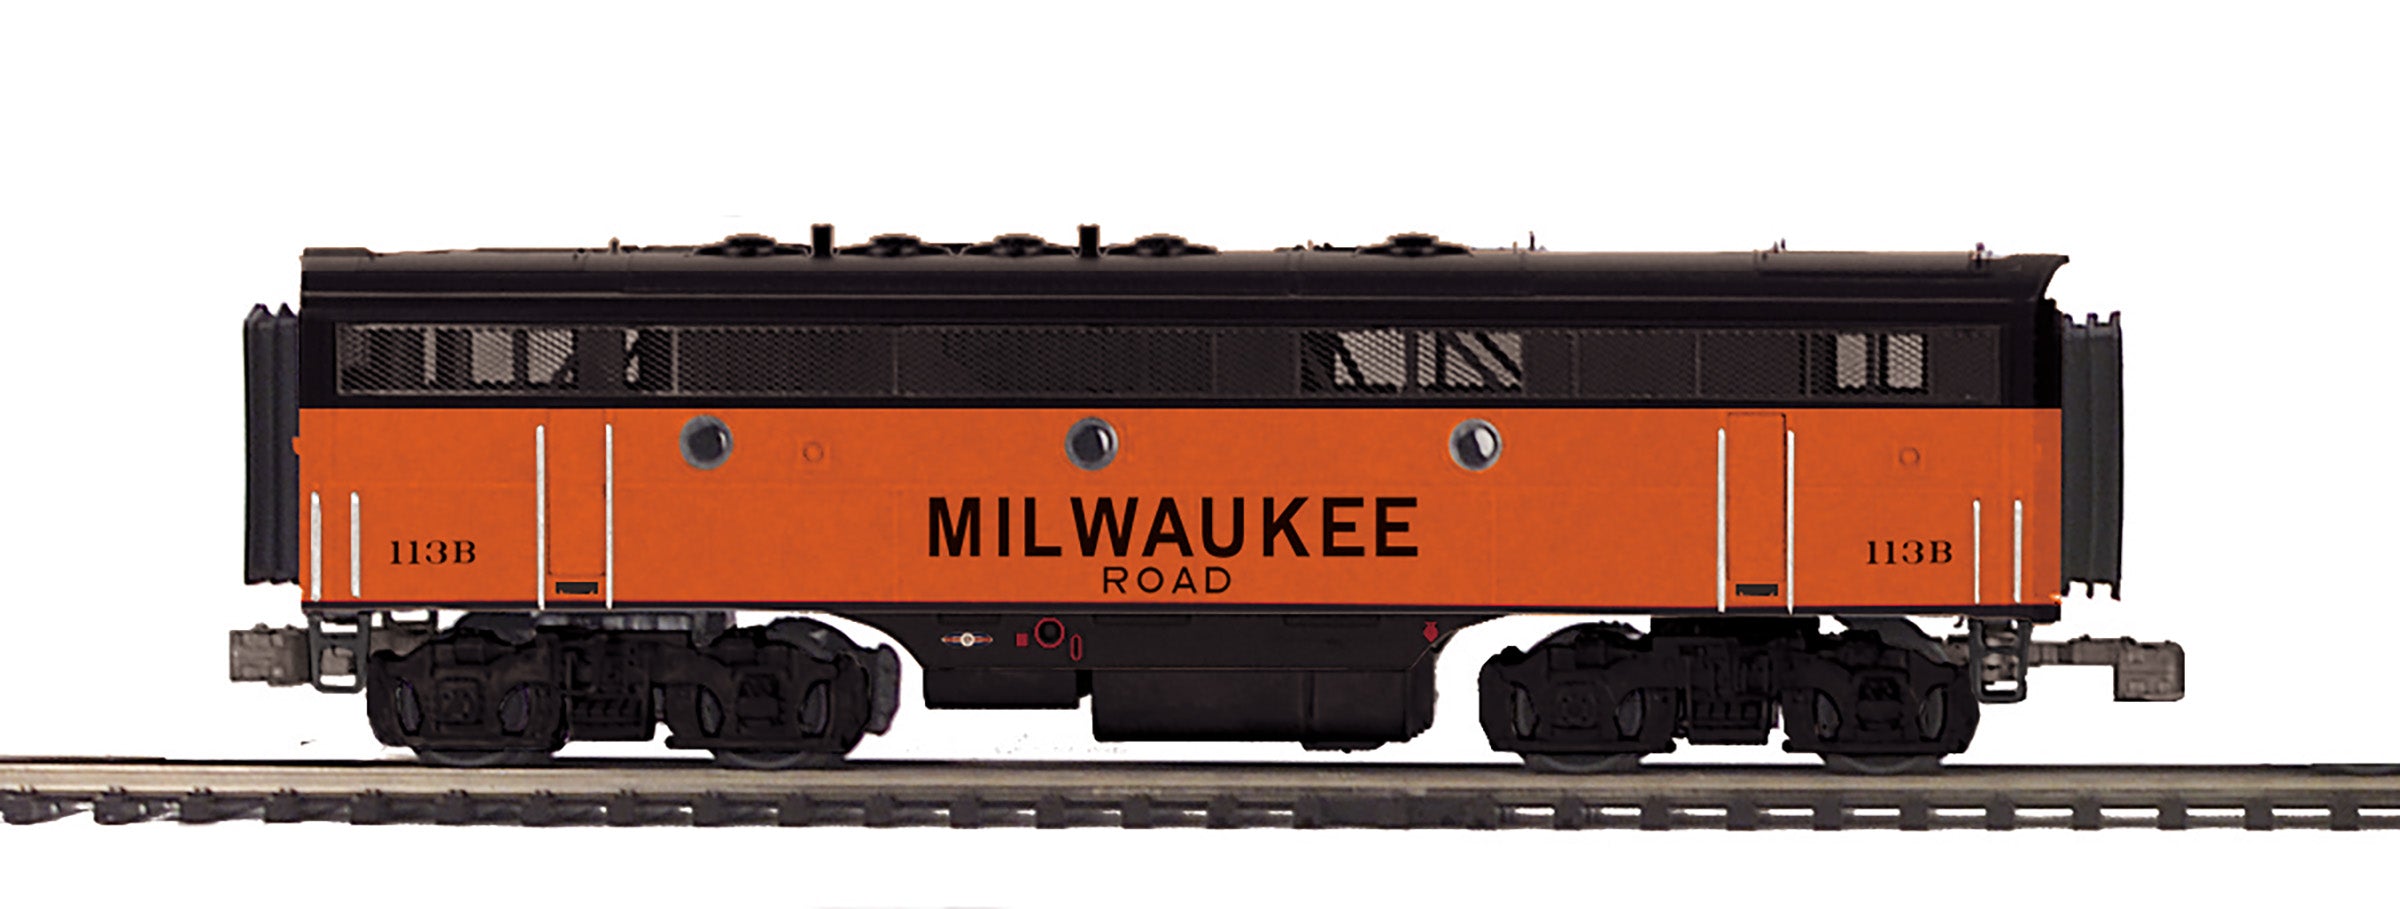 MTH 20-21825-3 - F-7 B Unit Diesel Engine "Milwaukee Road" #113B (Unpowered) - Custom Run for MrMuffin'sTrains